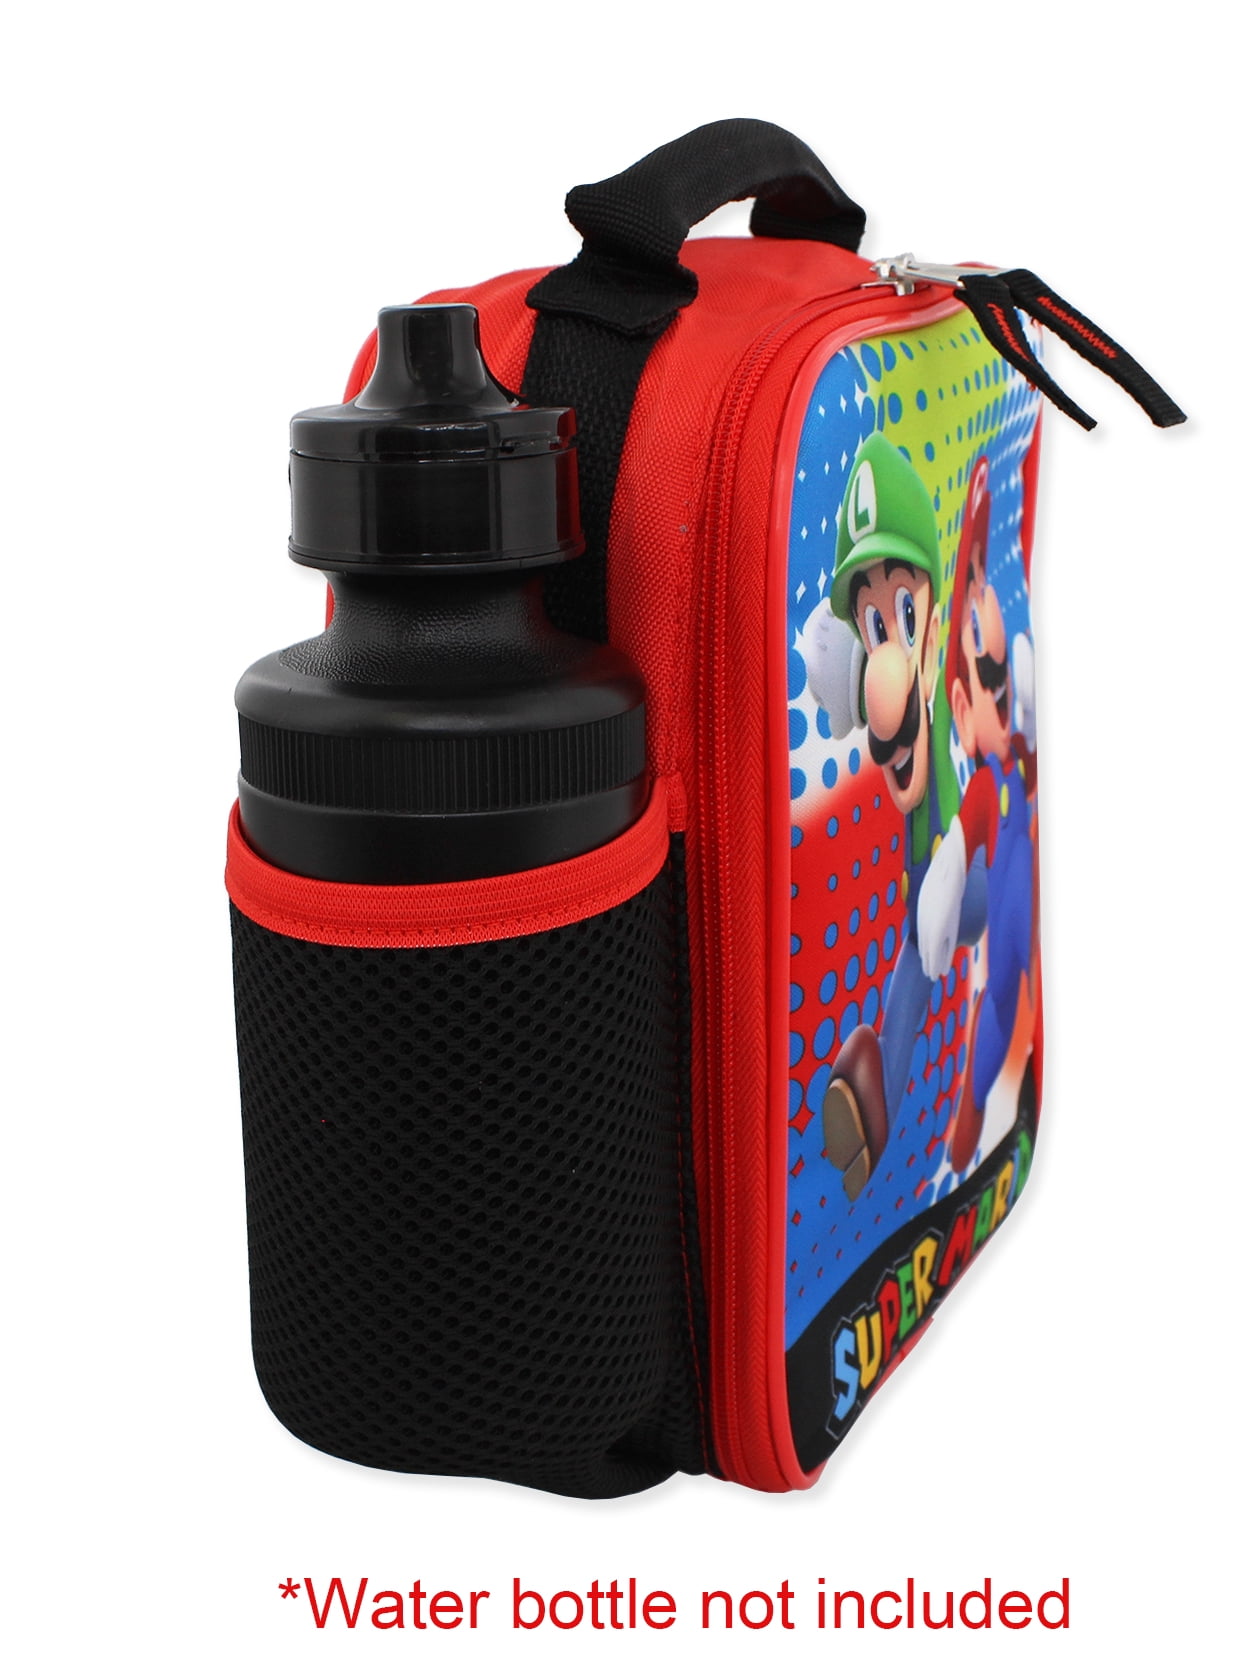 Super Mario lunch bag – Pardus Clothing LLC